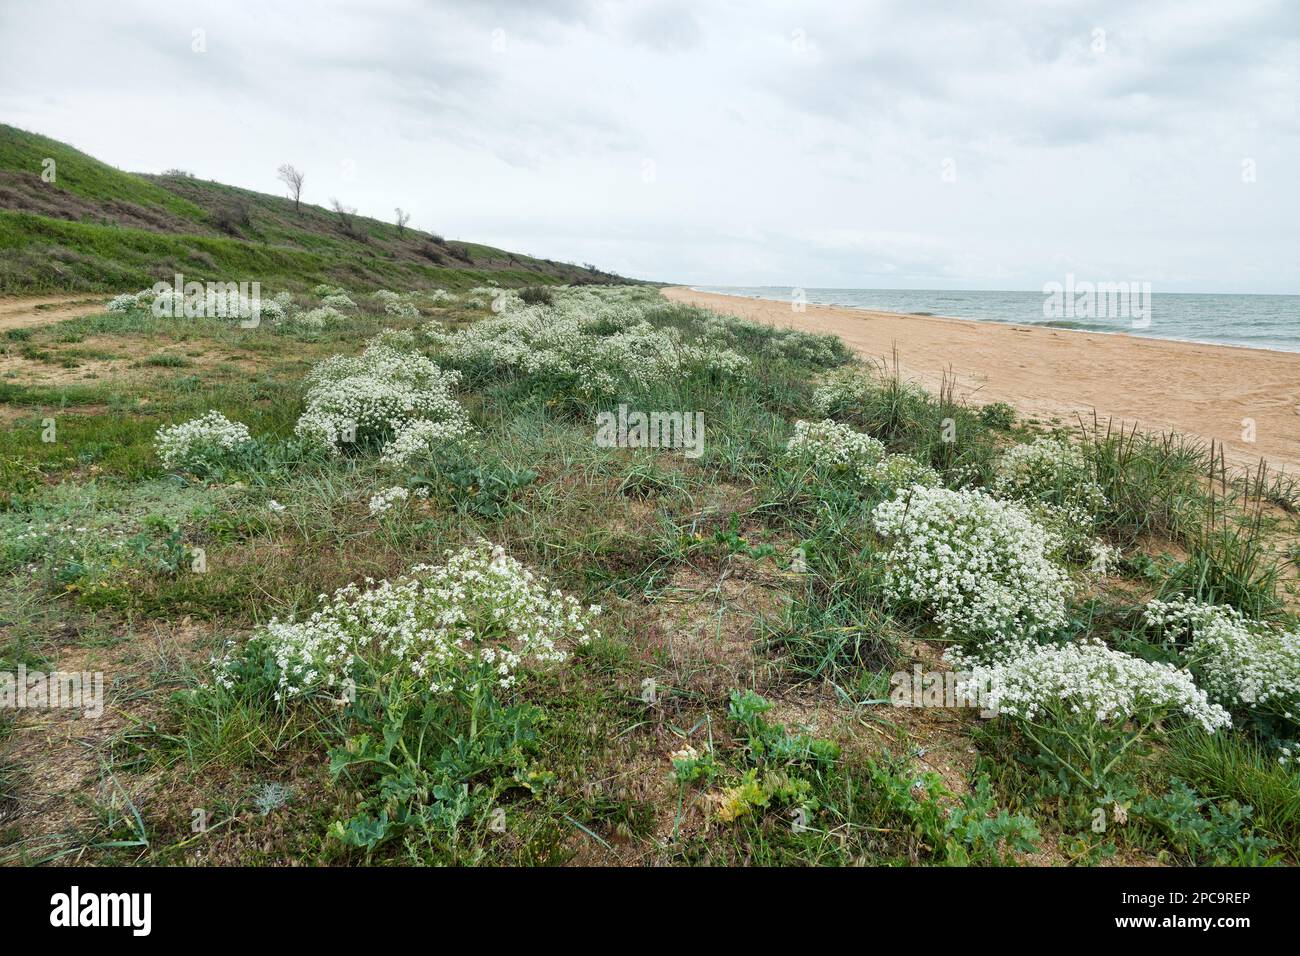 Sand-shell beach of sea and sand dunes with psammophytic vegetation. White Russian sea kale (Crambe tatarica), European dune grass (Elymus arenarius) Stock Photo